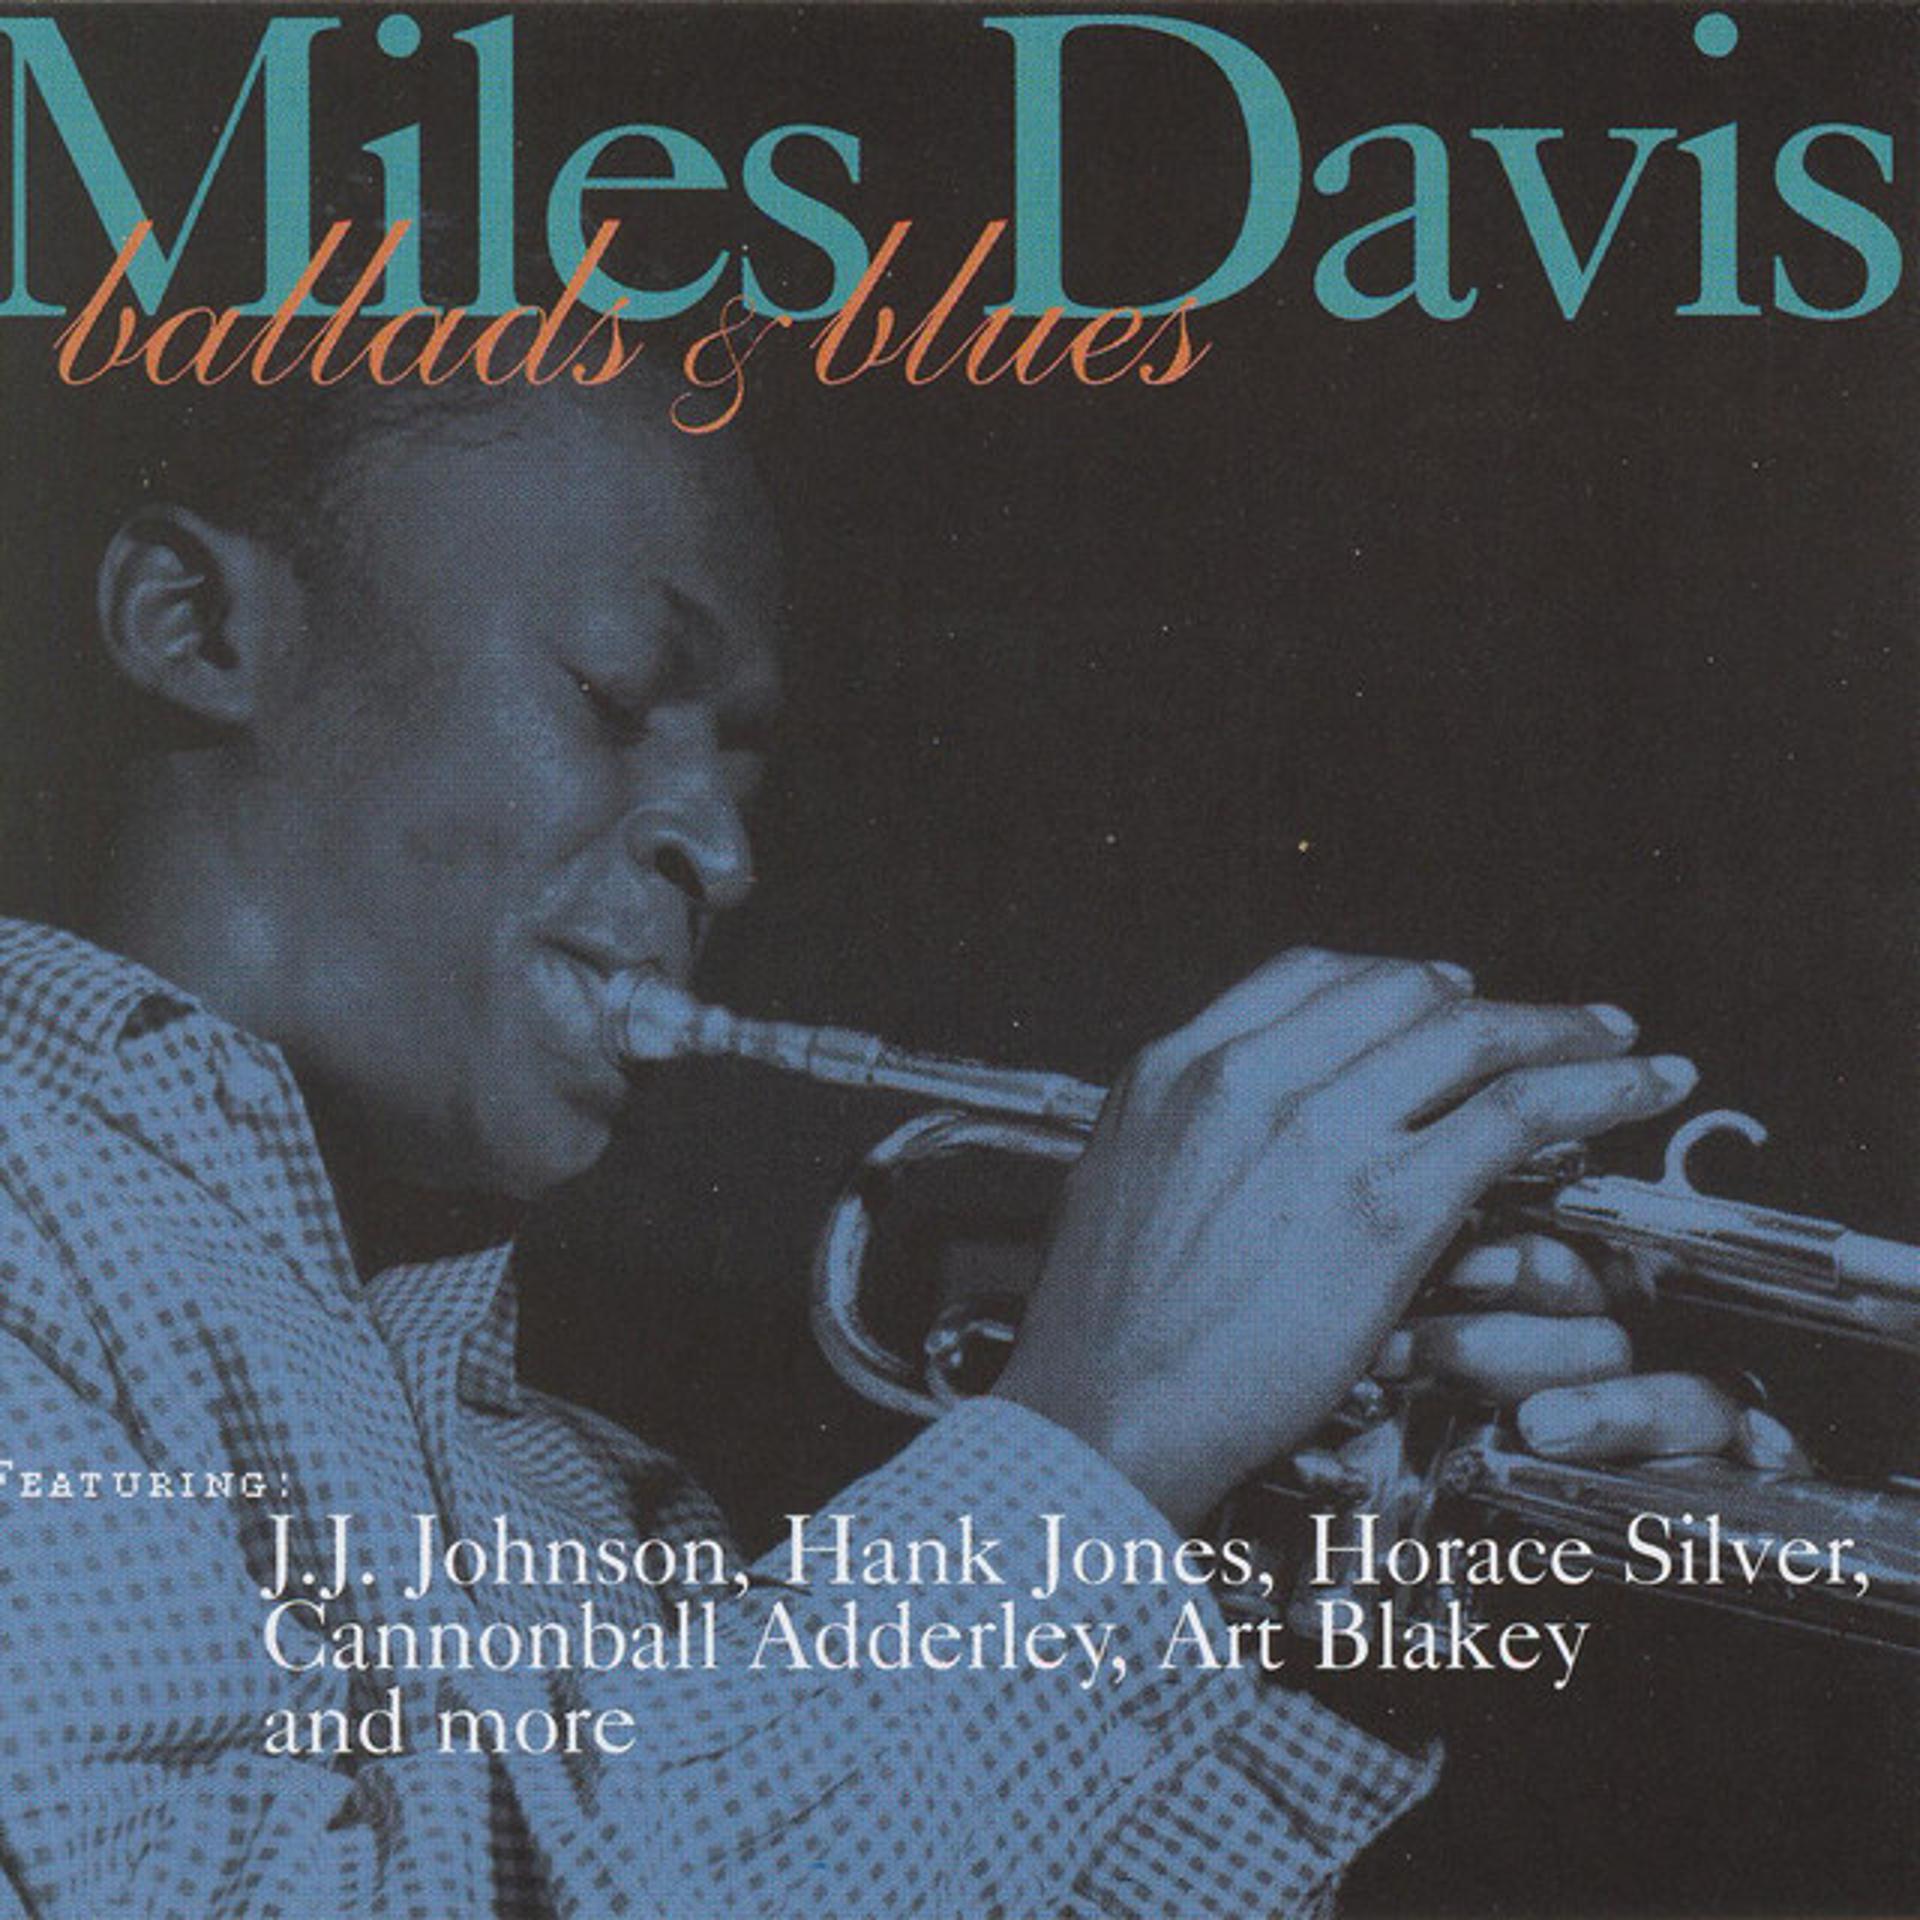 Blue miles. Ballads & Blues Miles Davis. Майлс Дейвис альбом. Miles Davis 1967 - Antwerp Blues. Blue Note Davis.